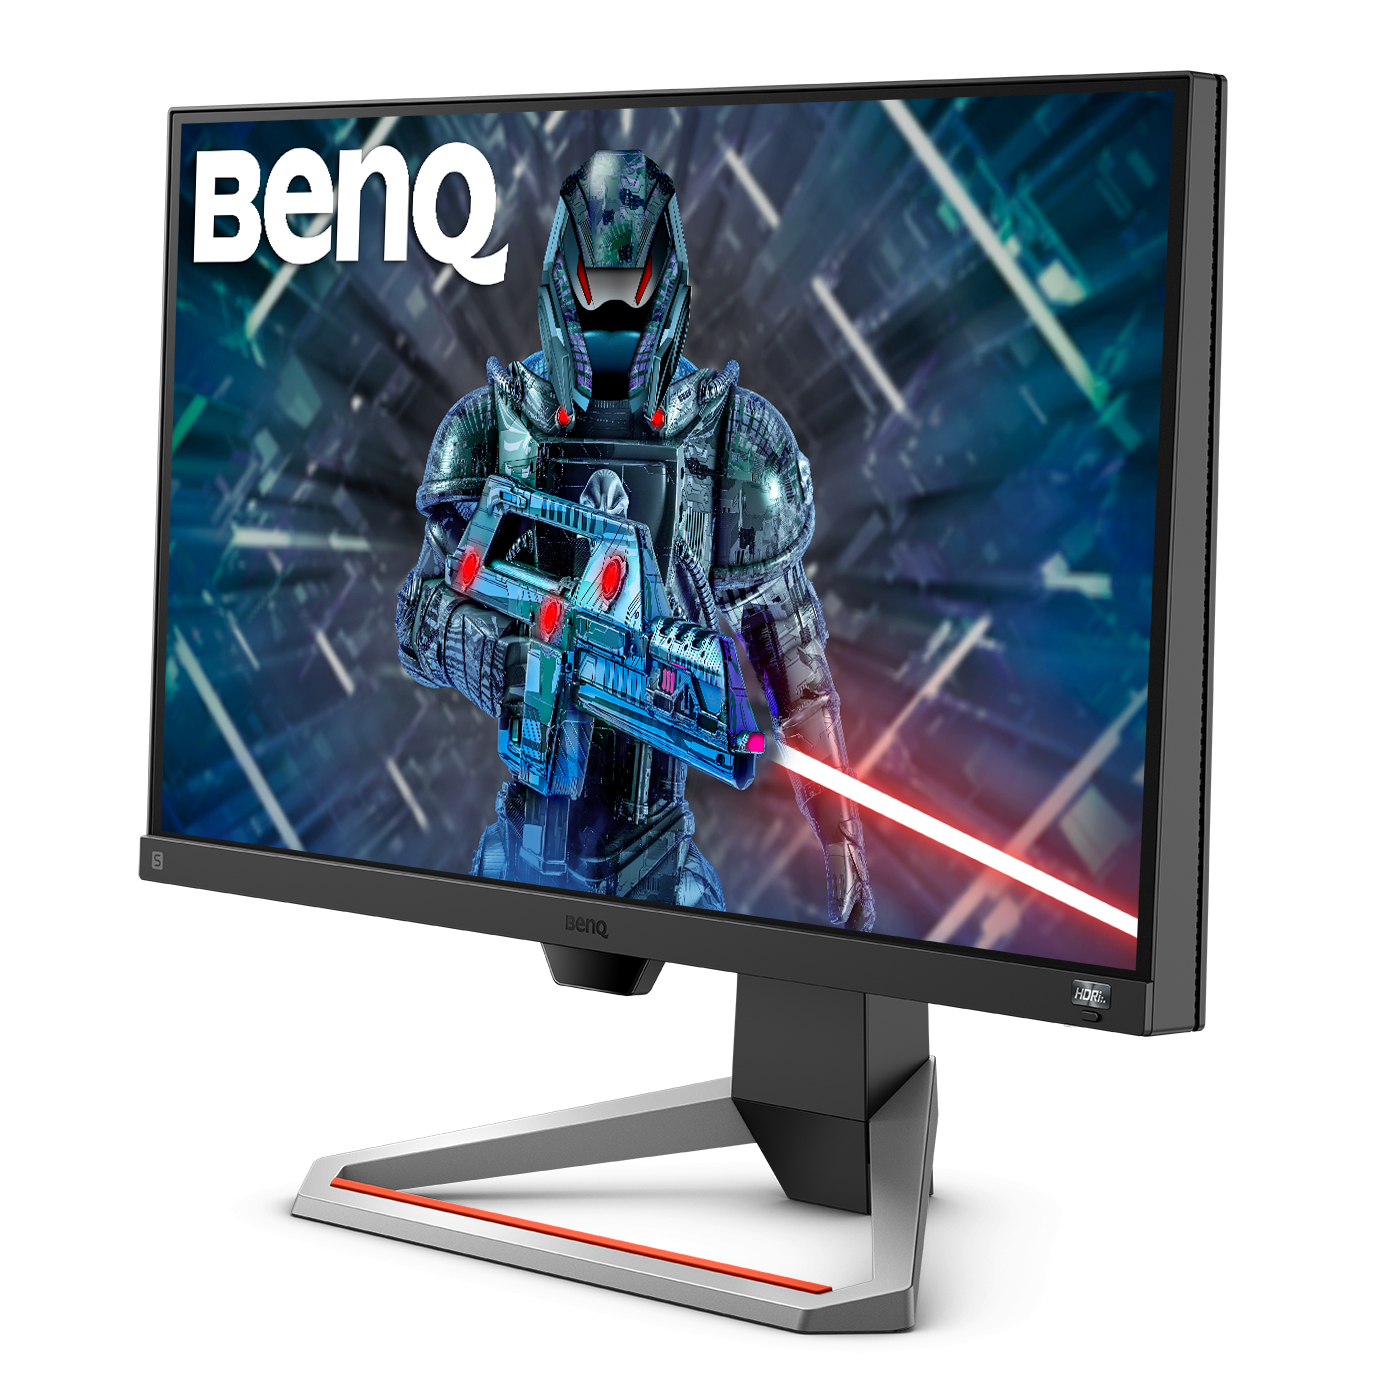 BenQ MOBIUZ EX2510s 165Hz Gaming Monitor